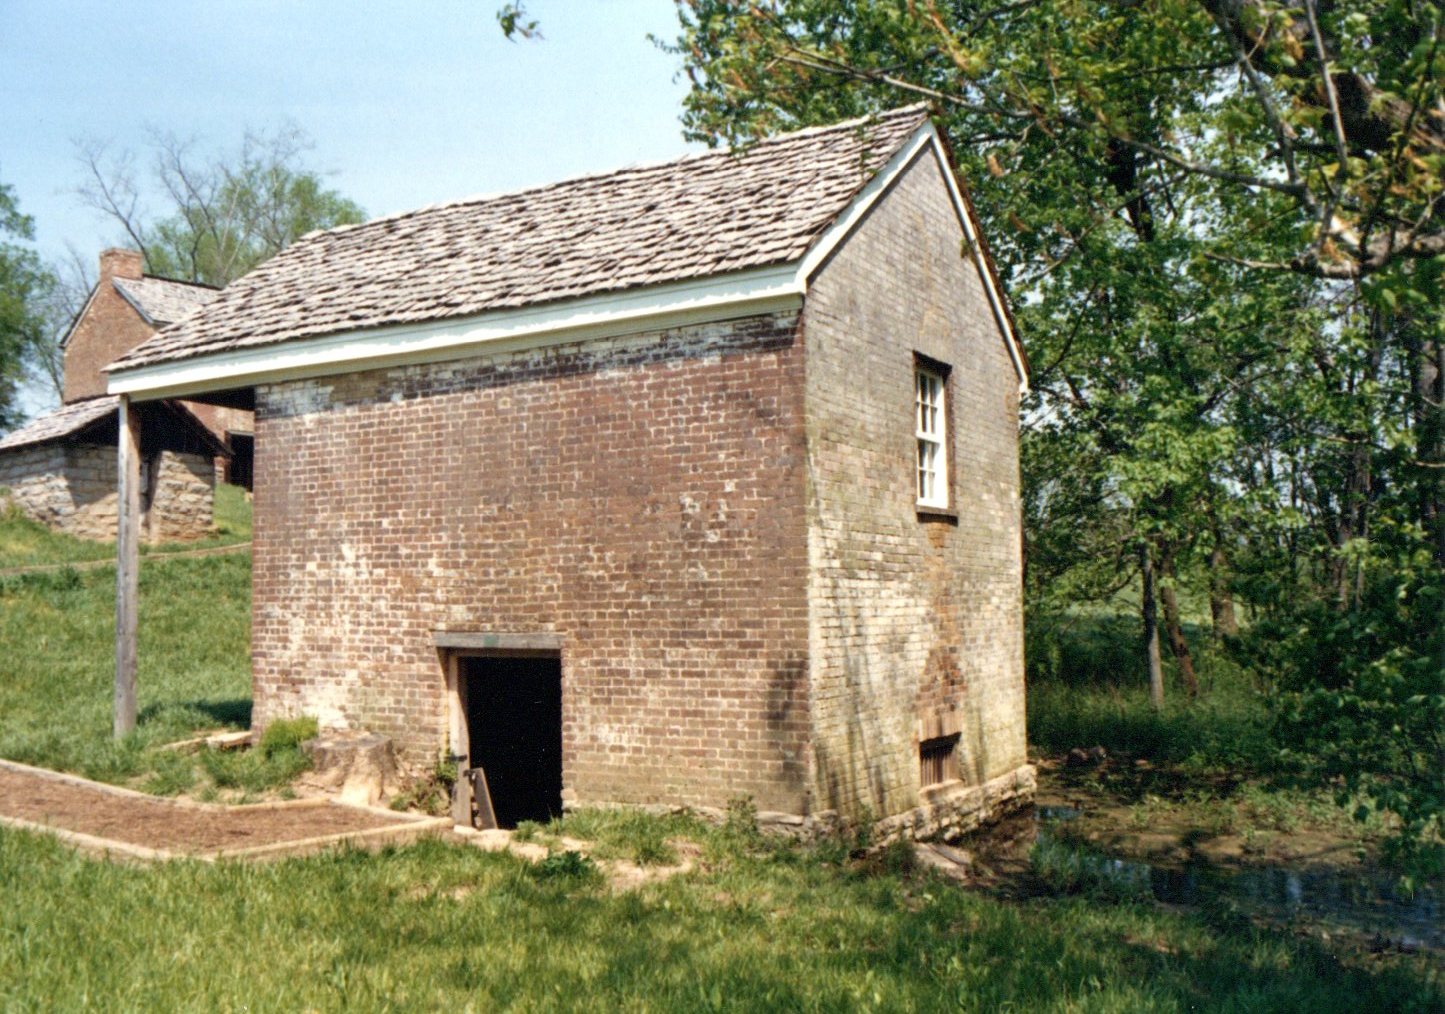 Springhouse, 1989